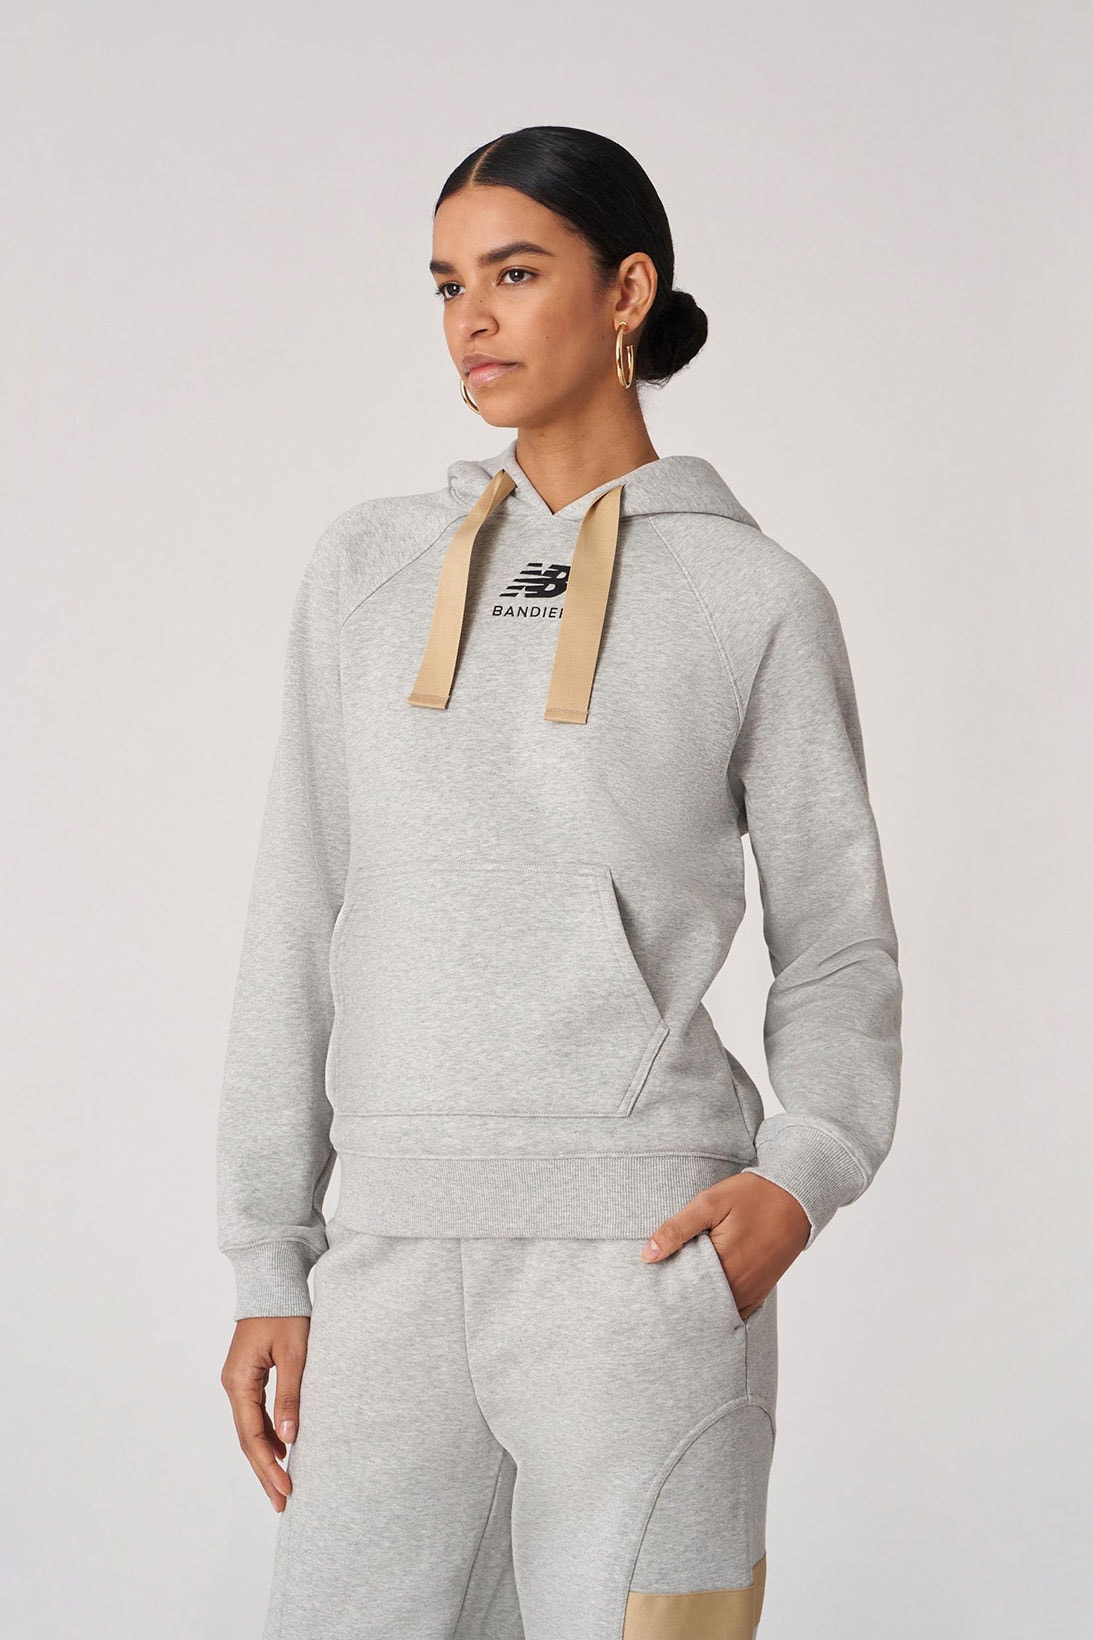 New Balance Bandier Collaboration hoodie Logo Sweatpants